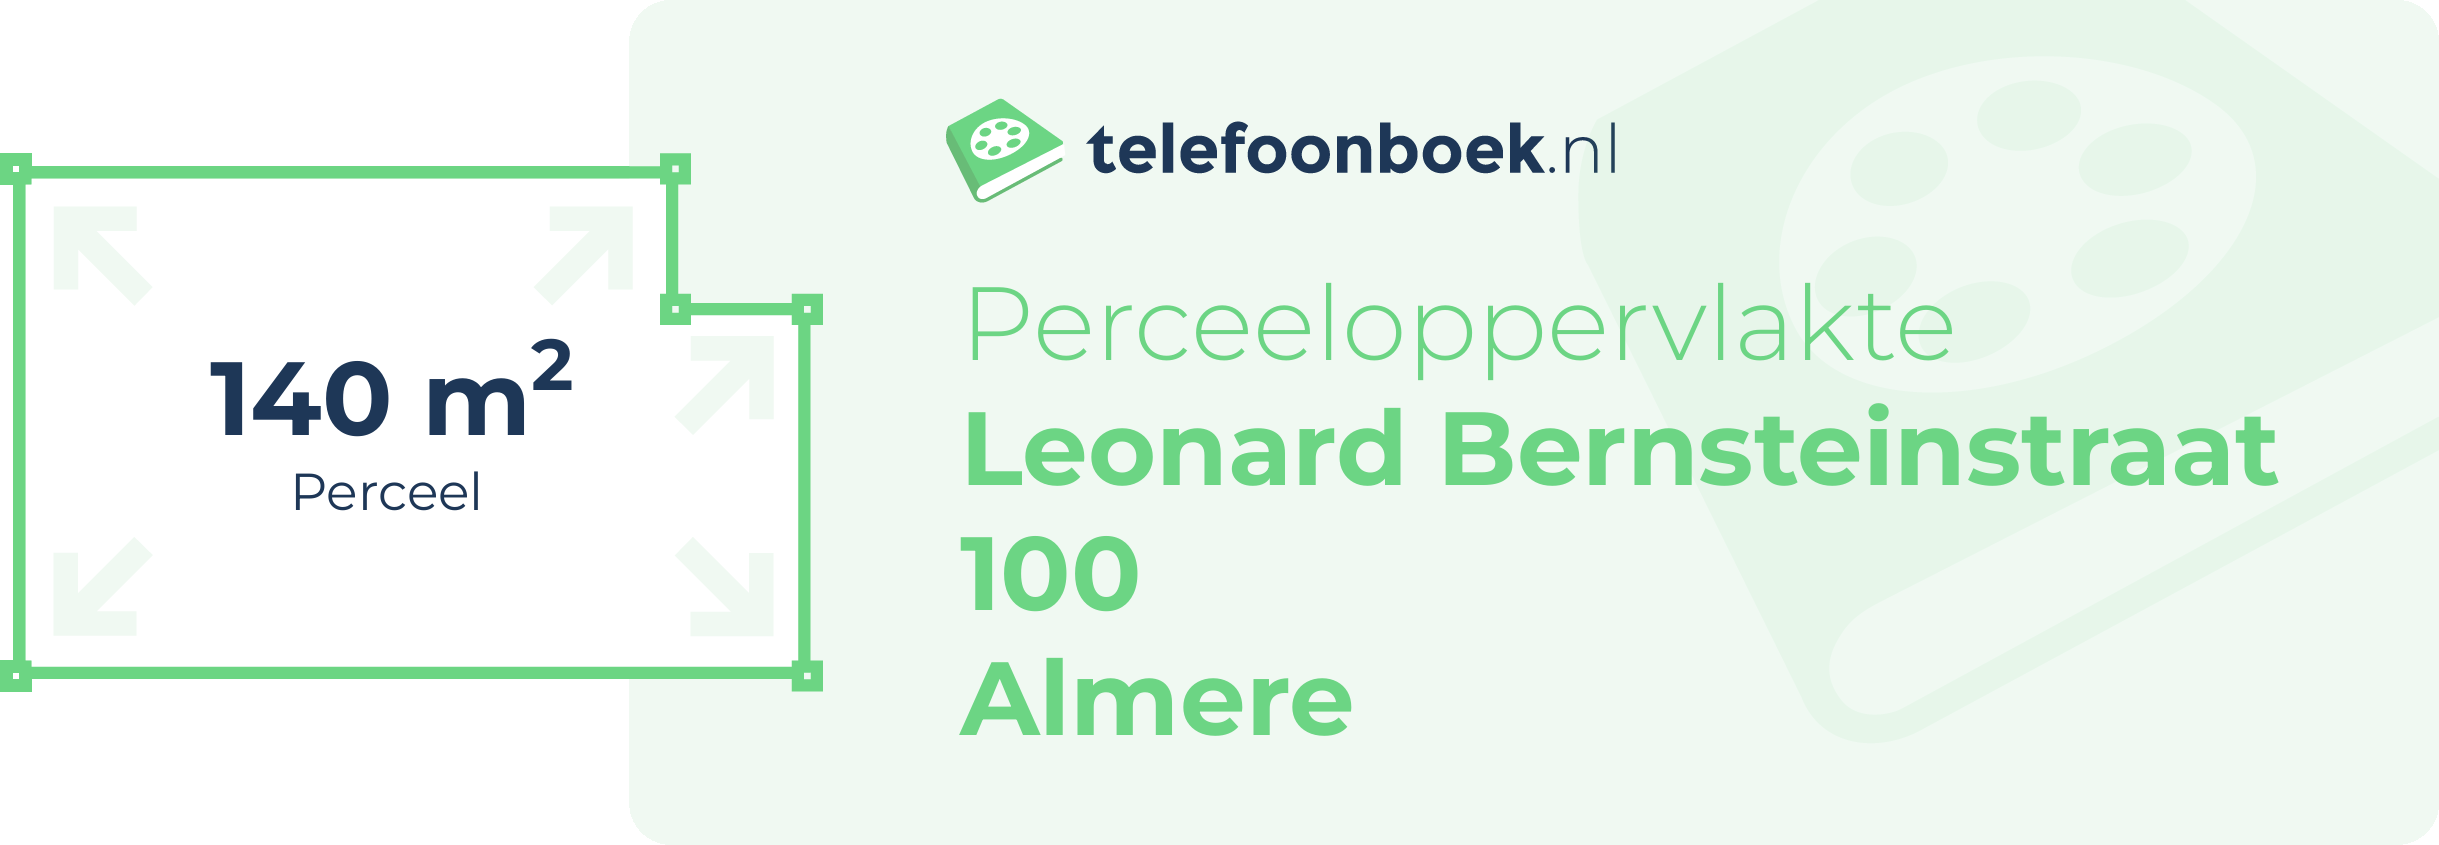 Perceeloppervlakte Leonard Bernsteinstraat 100 Almere